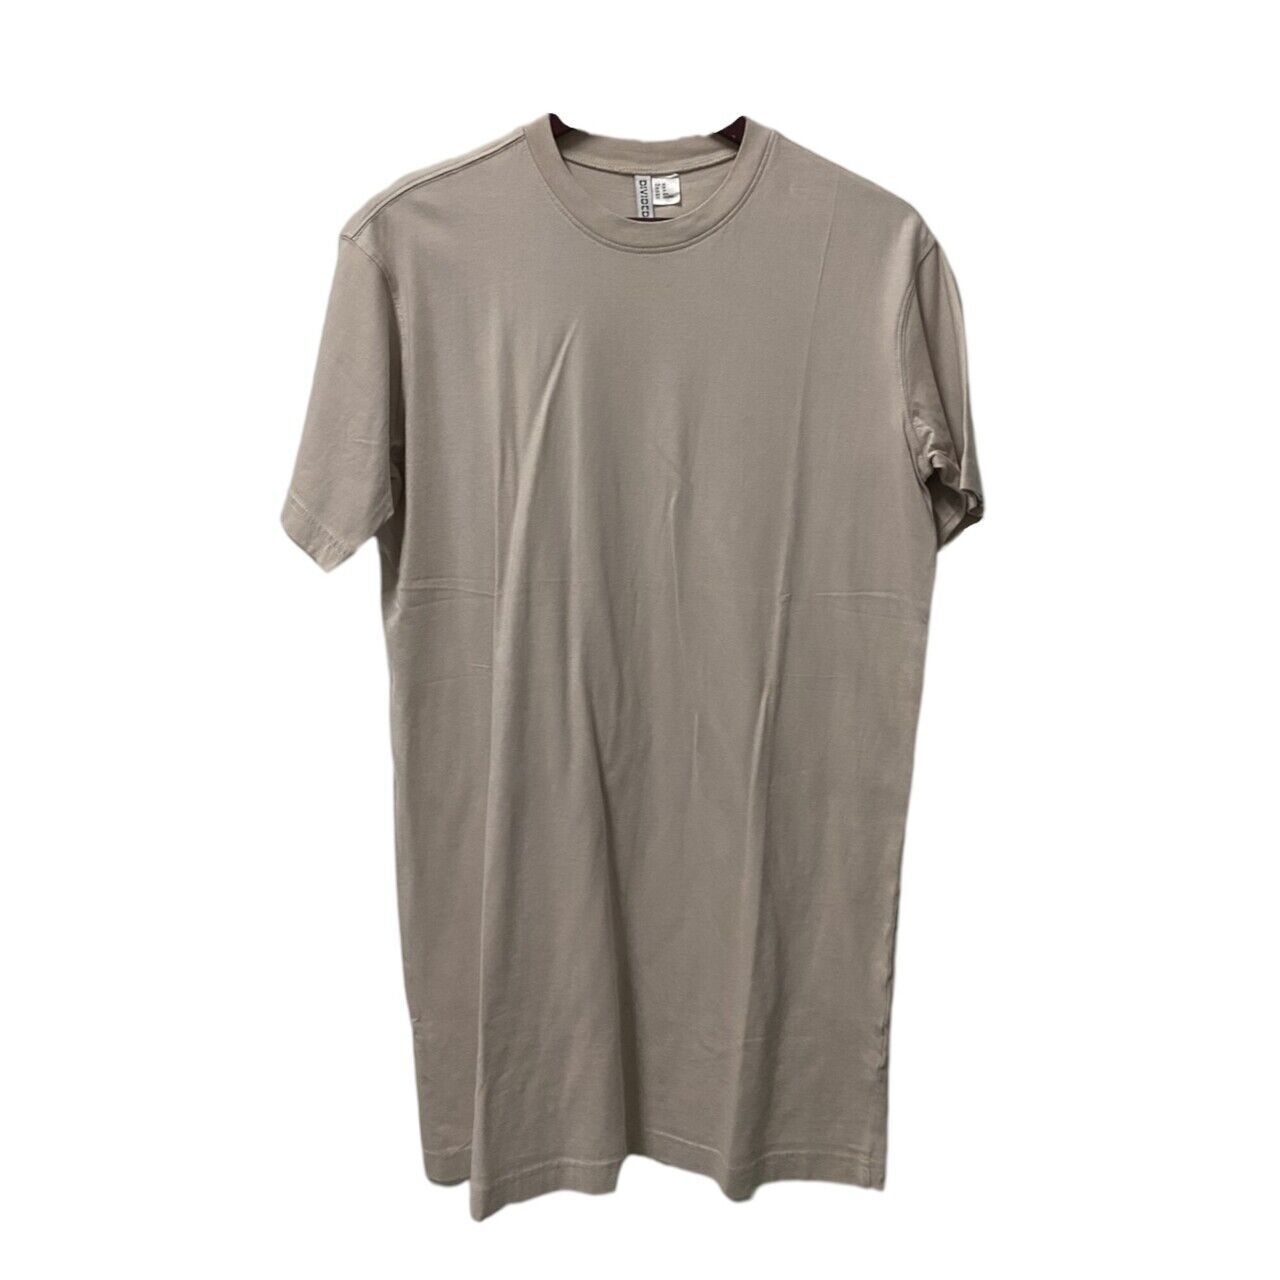 H&m Beige Oversized T-Shirt